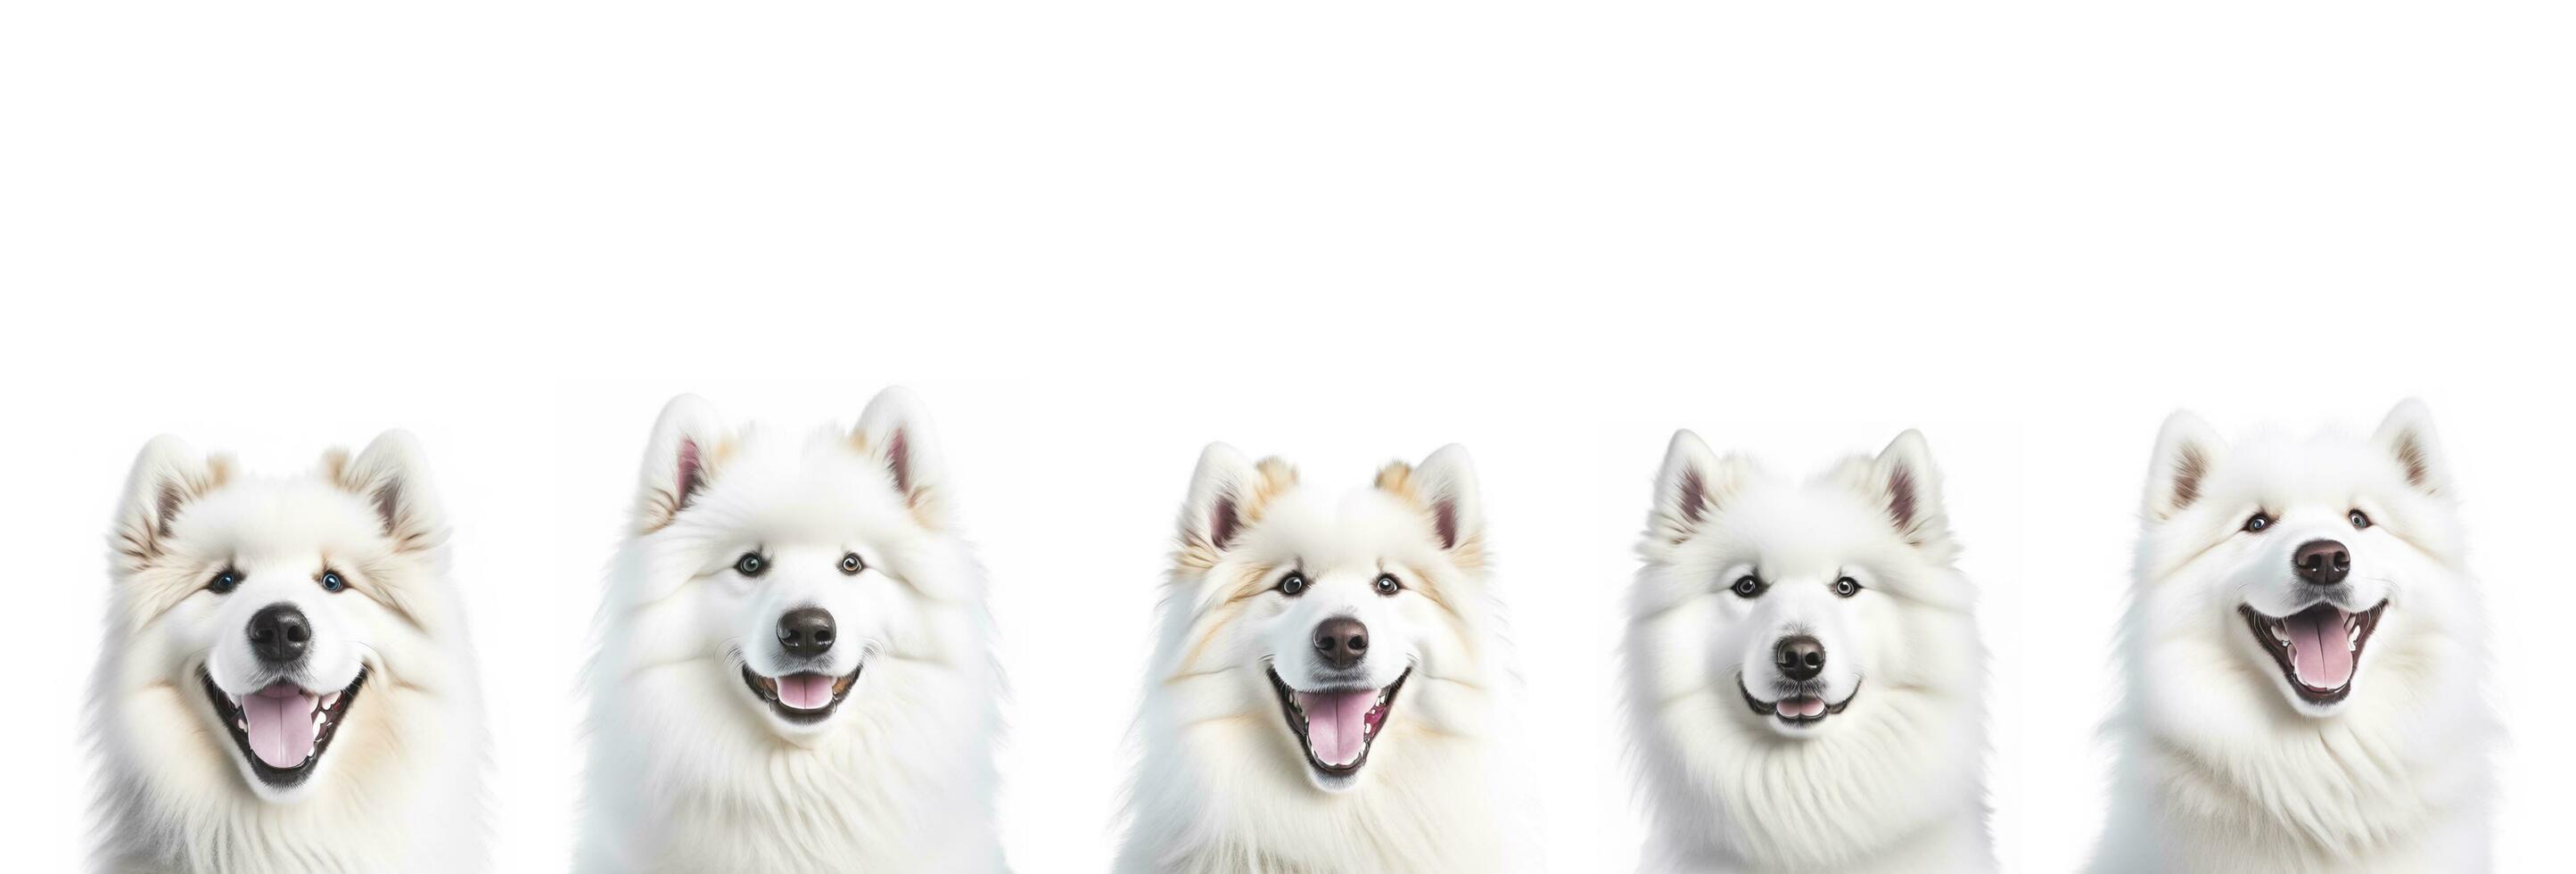 collage detailopname portret groep van jong schattig wit gelukkig glimlachen samojeed hond hoofd Aan wit achtergrond spandoek. ai gegenereerd foto